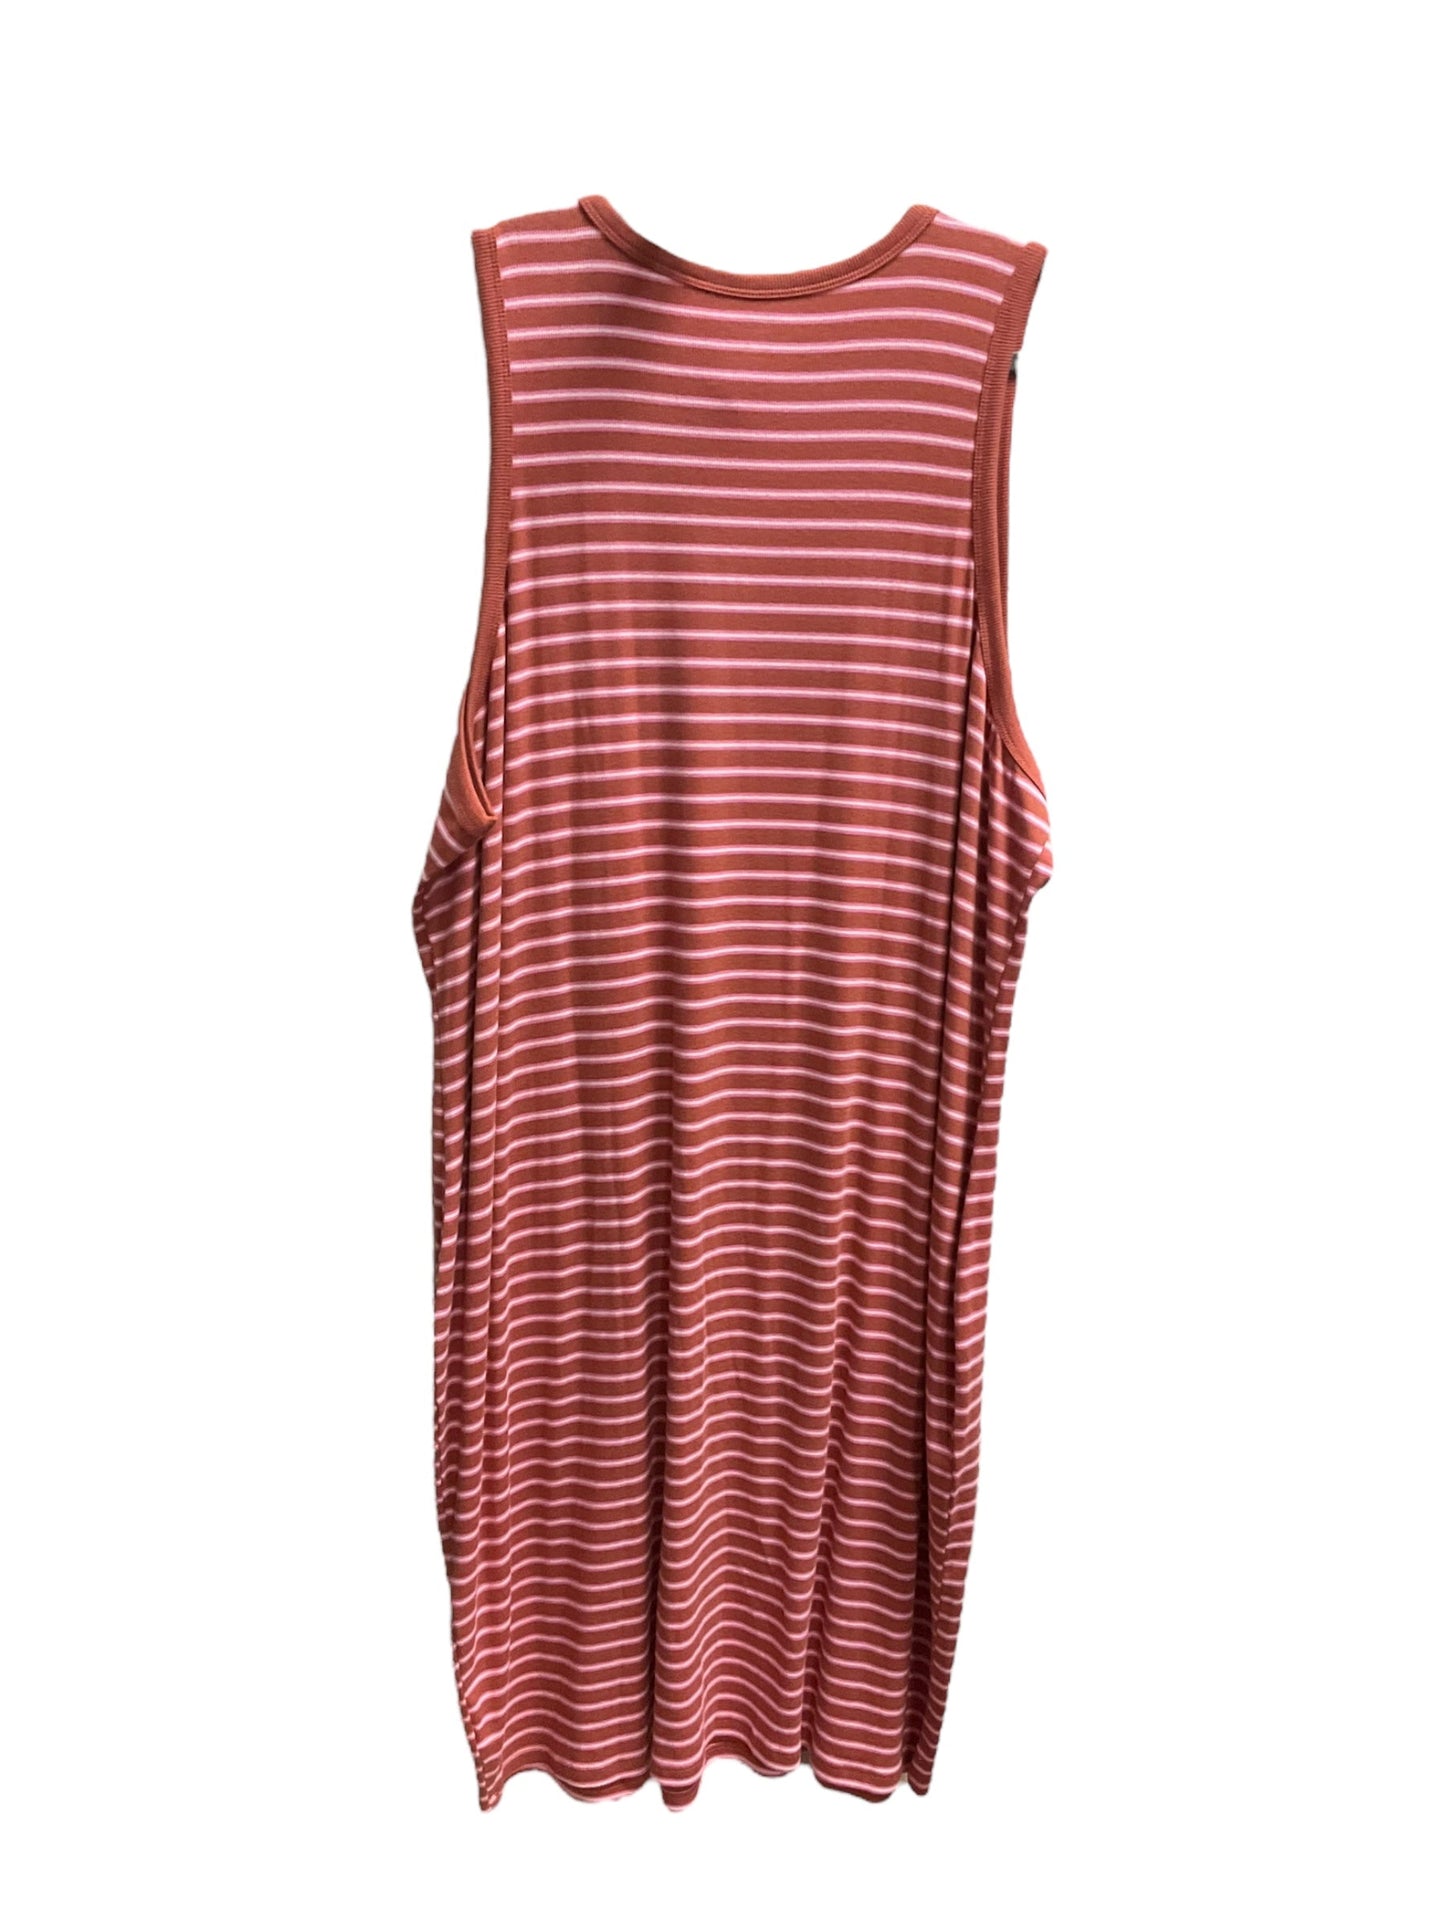 Striped Pattern Dress Casual Midi Ana, Size 3x